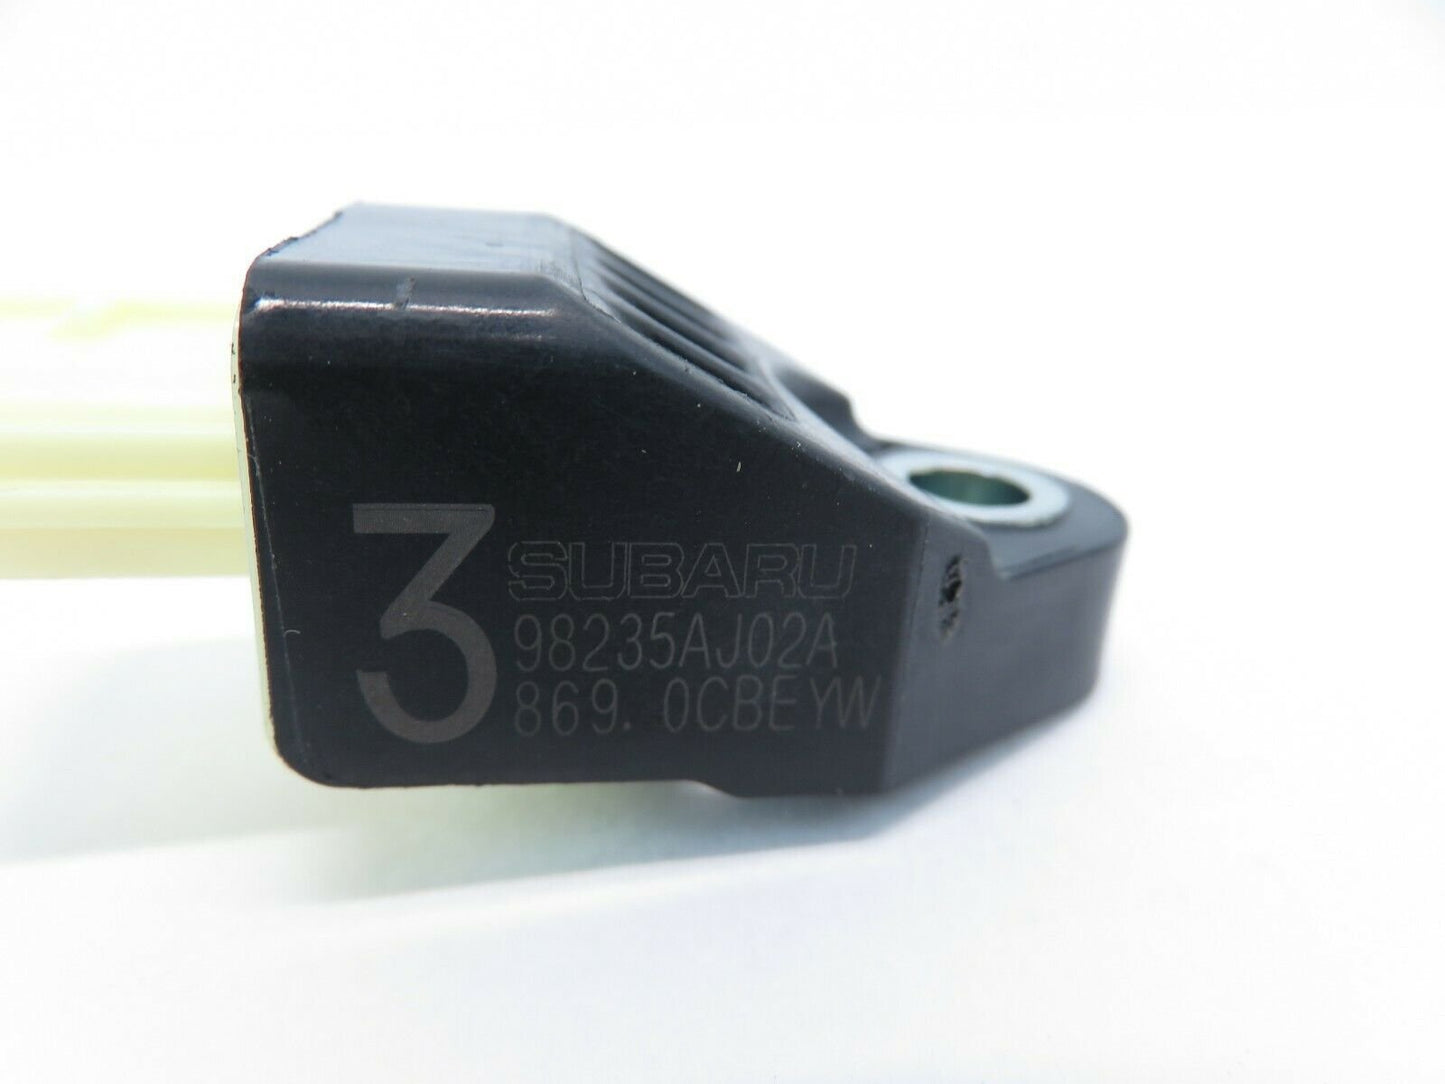 13-14 Subaru Legacy Outback Impact Sensor 98235AJ02A Crash SRS 2013-2014